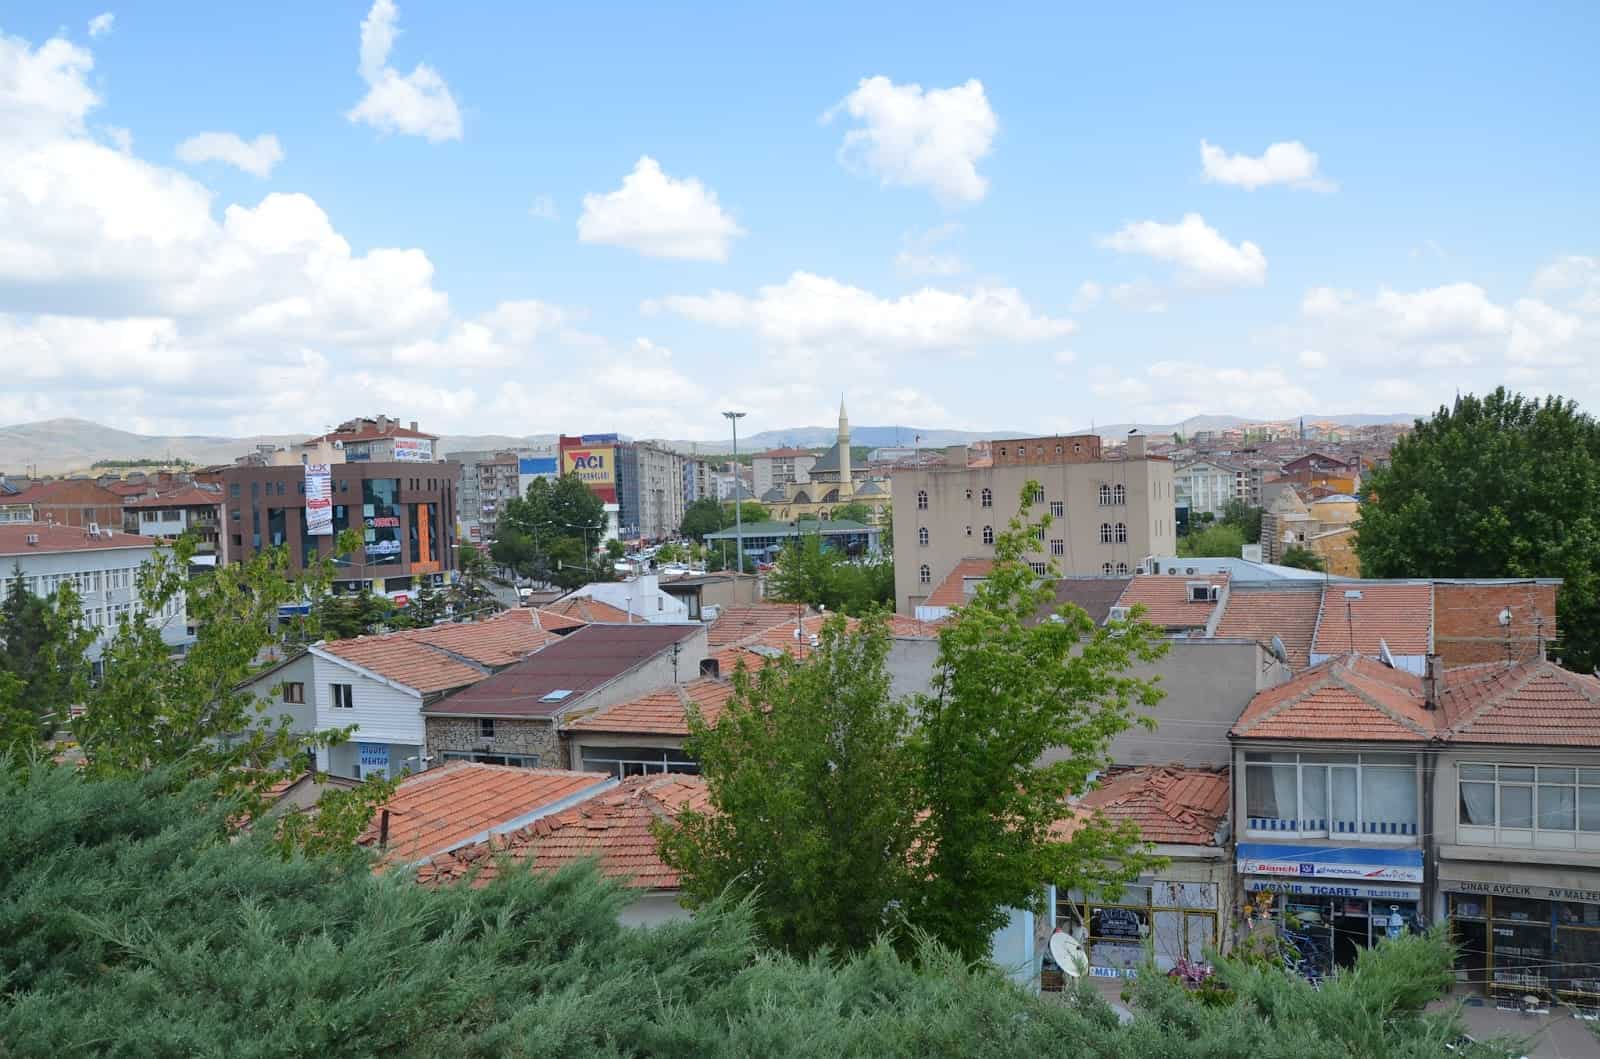 The view from Kırşehir Kalesi in Kırşehir, Turkey